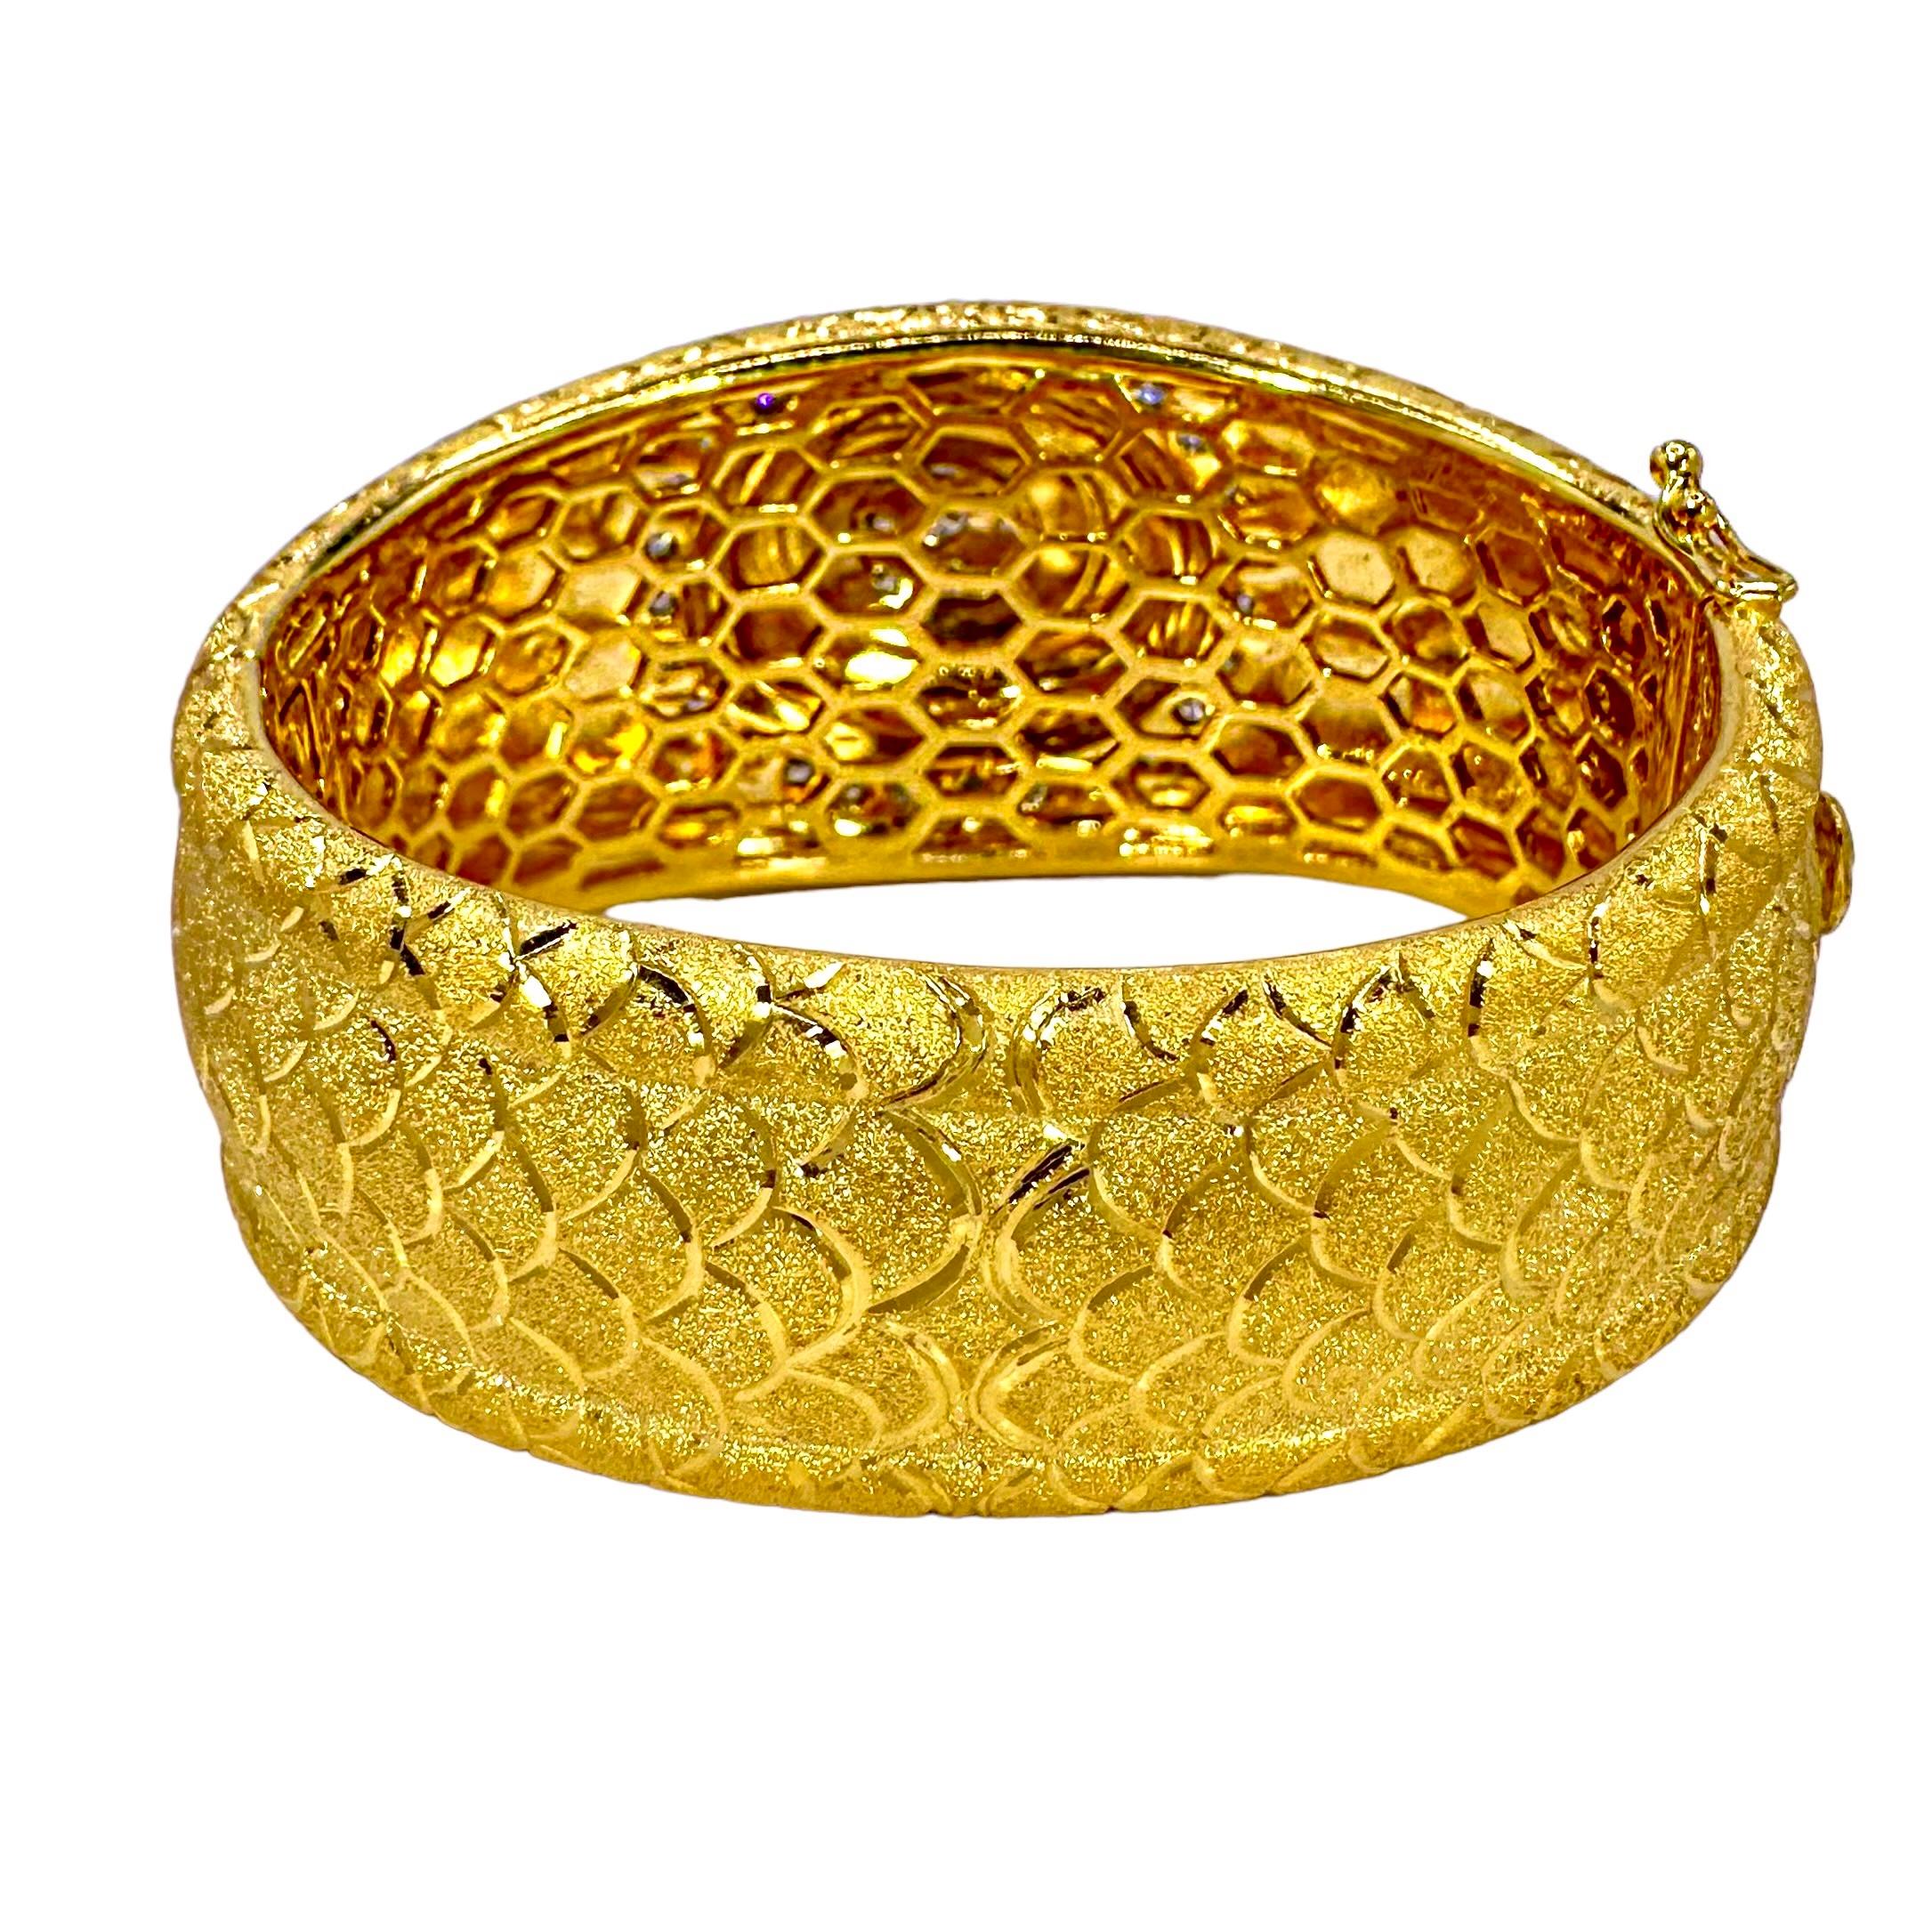 Regal Design, Diamond & Florentine Finish 18K Gold Cuff Bracelet 1.25 Inch Wide In Excellent Condition For Sale In Palm Beach, FL